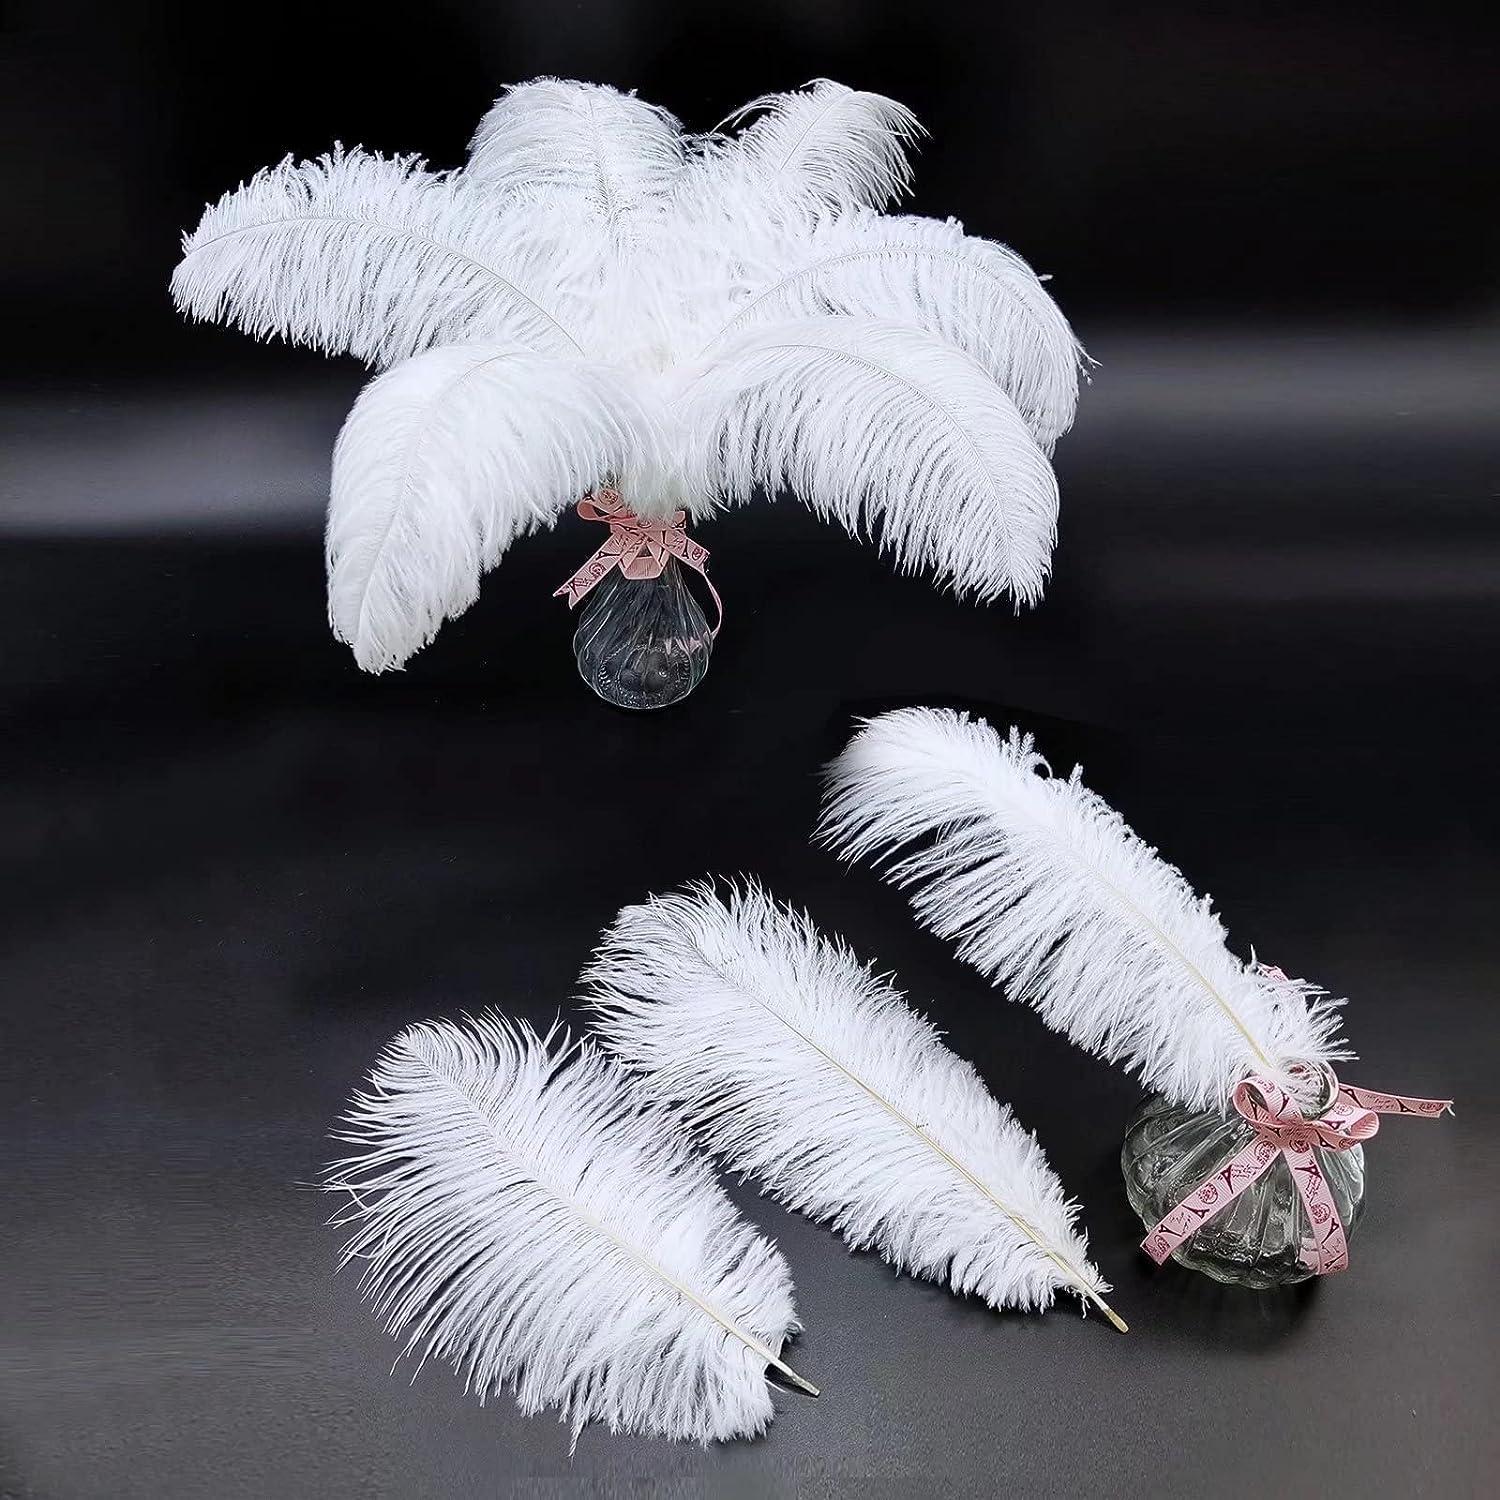 AWAYTR 10-12 inch (25-30cm) Natural Ostrich Feathers for Wedding  Centerpieces Home Decoration,Flower Arrangement,DIY Christmas Decorations